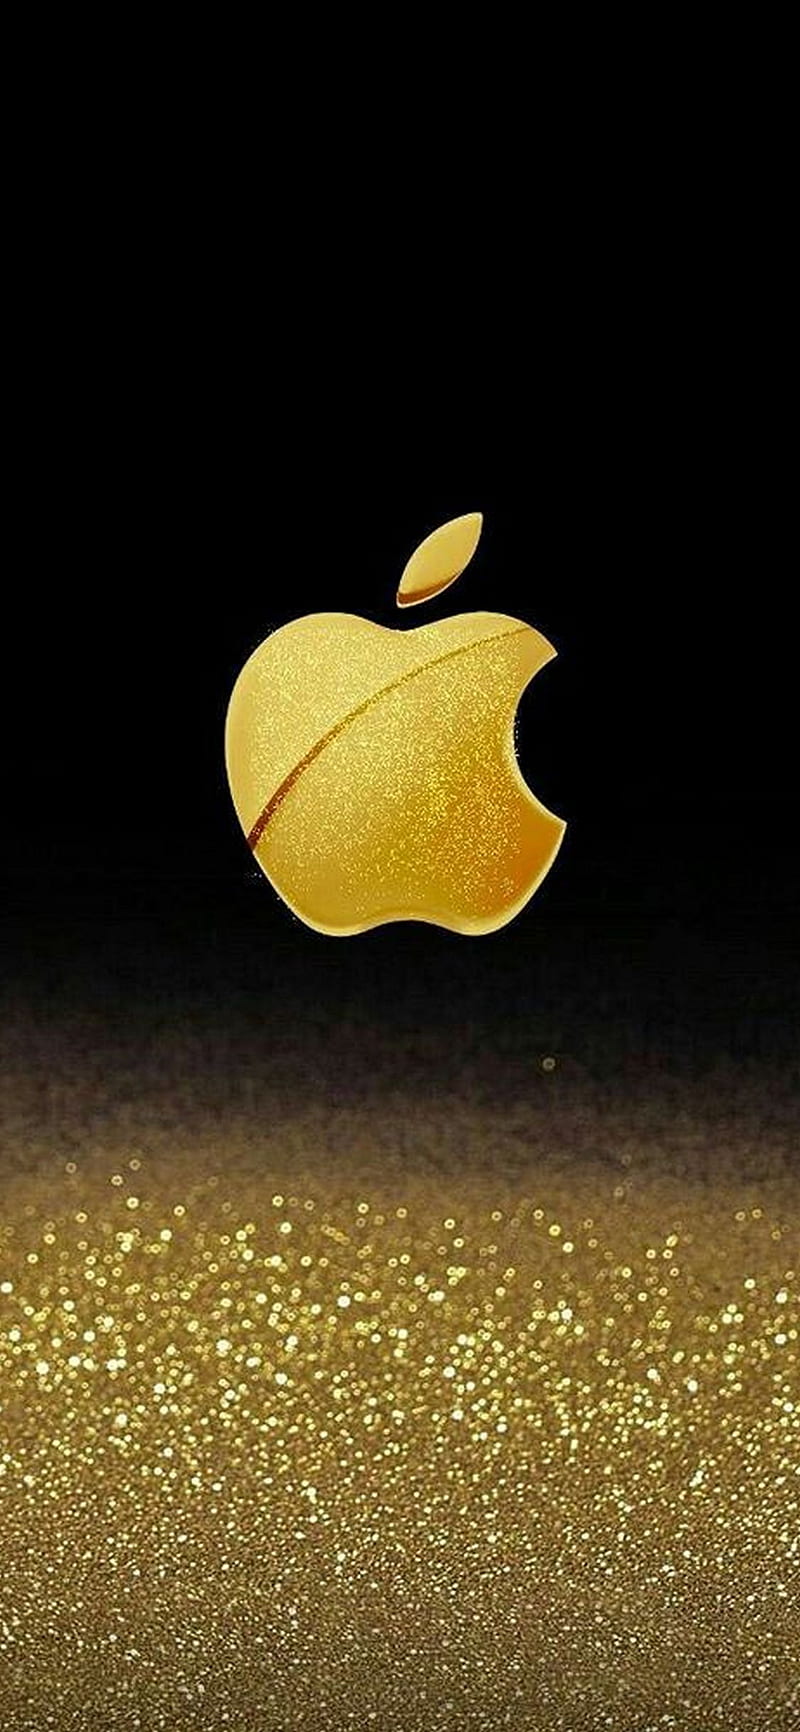 Top 999+ Apple Logo 4k Wallpaper Full HD, 4K✓Free to Use